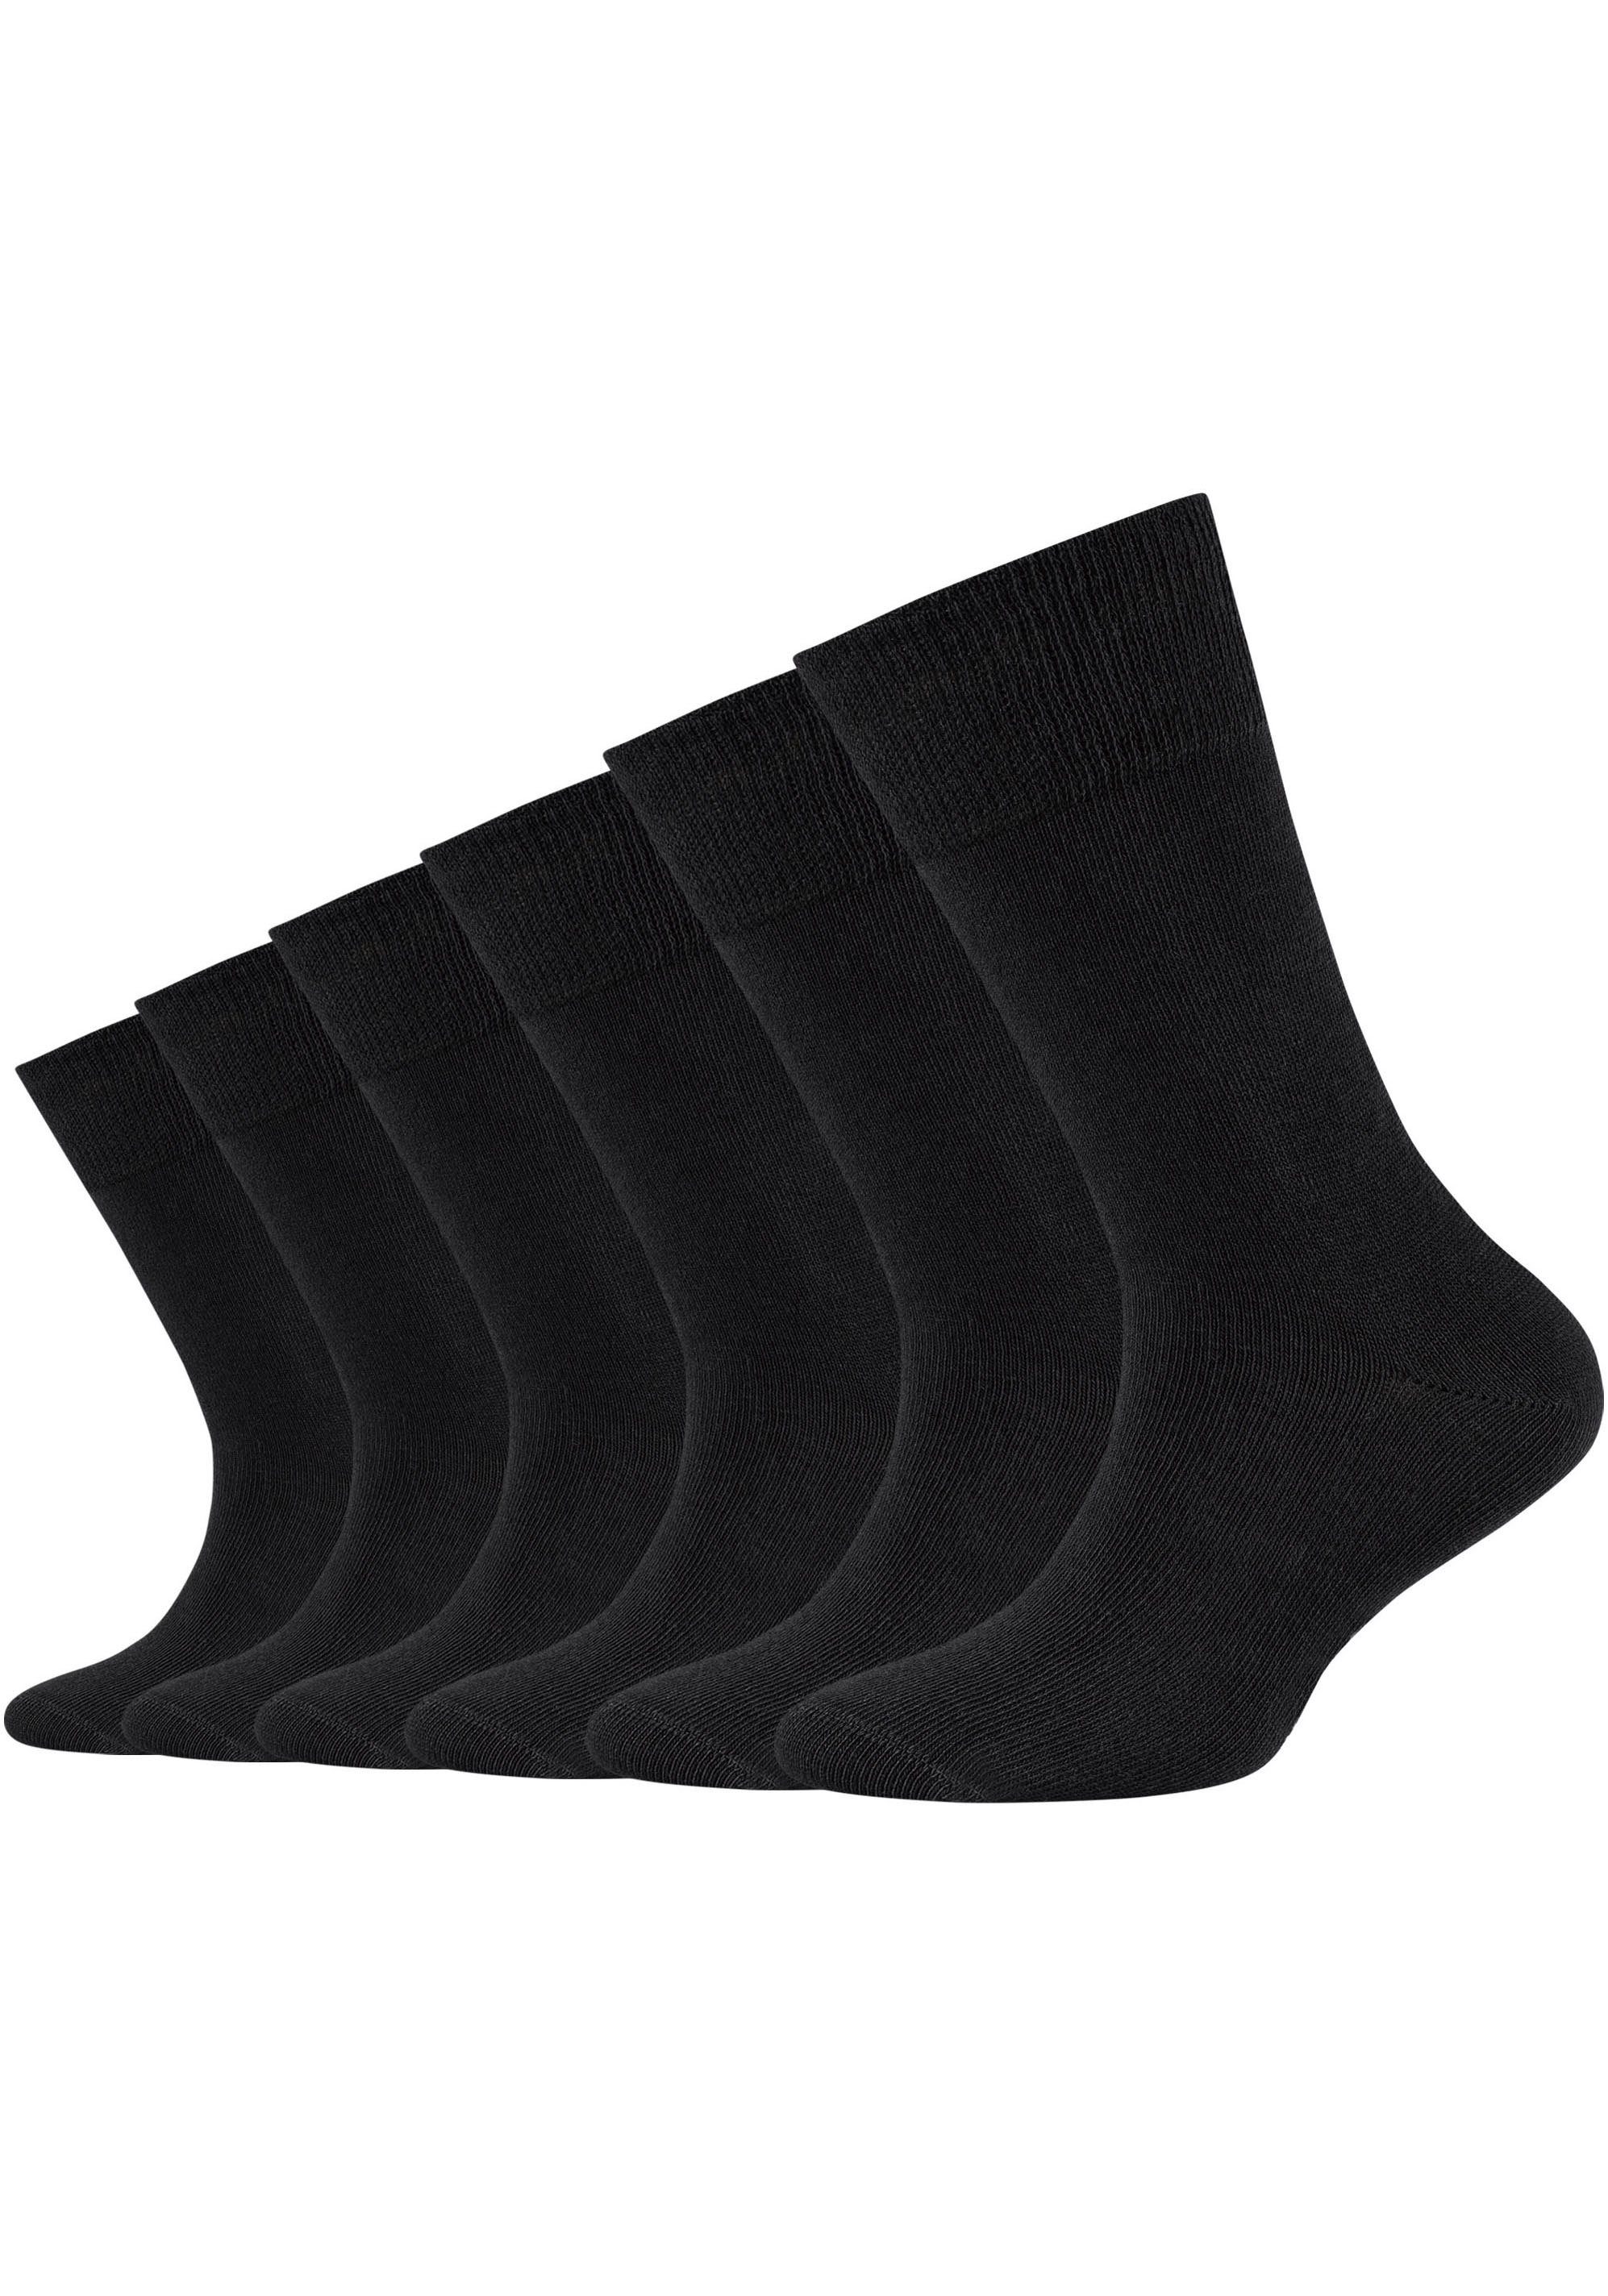 Baumwolle, Camano gekämmter verstärkter dank Besonders 6-Paar) Hoher bequem und Ferse Zehenspitze Socken an (Packung, Anteil